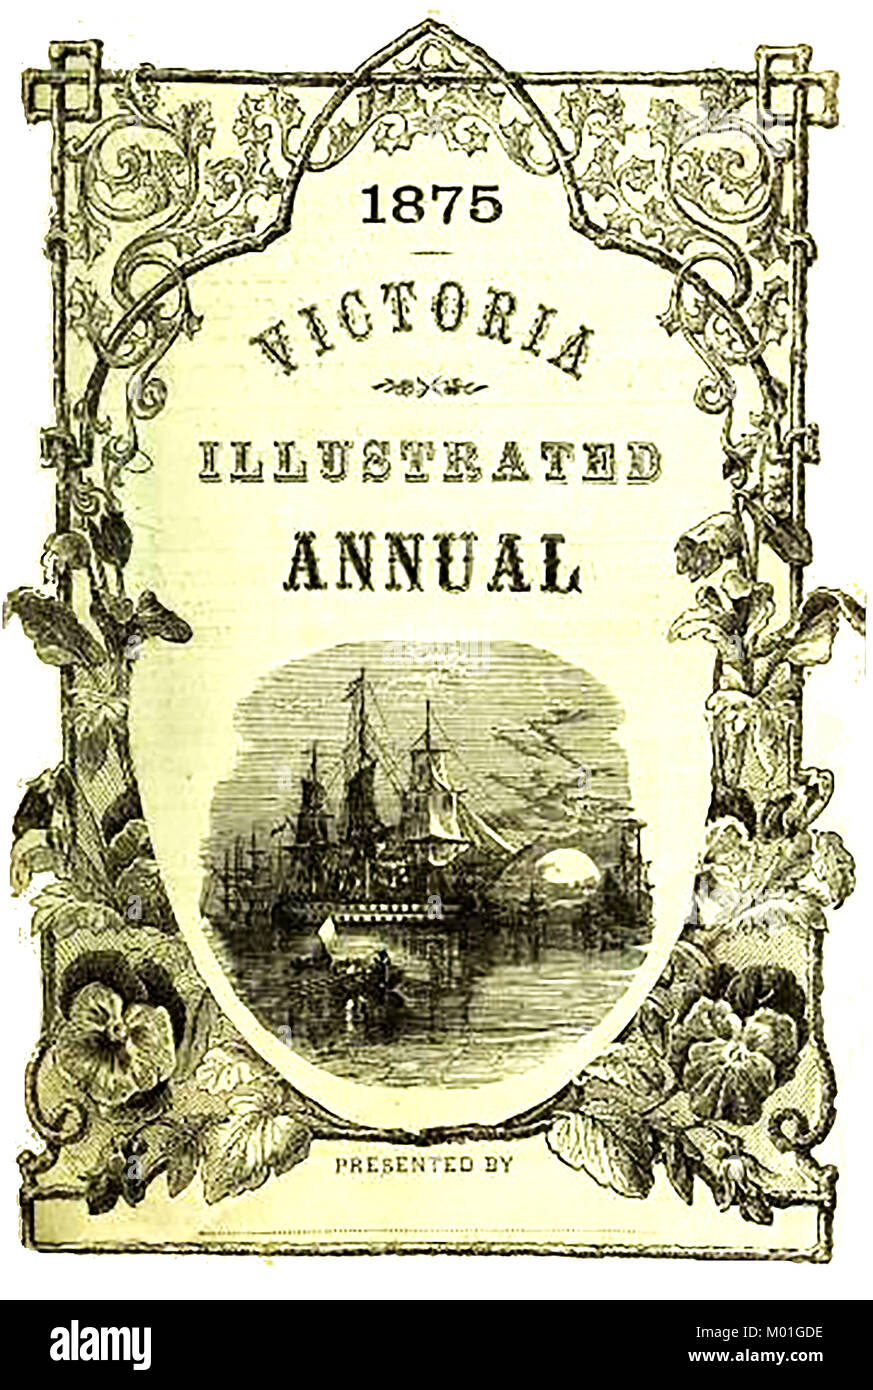 Lake Shore and Michigan Southern Railway 1876 -illustration frontispice de Victorian Illustrated magazine annuel pour les chemins de fer du Michigan 1875 Banque D'Images